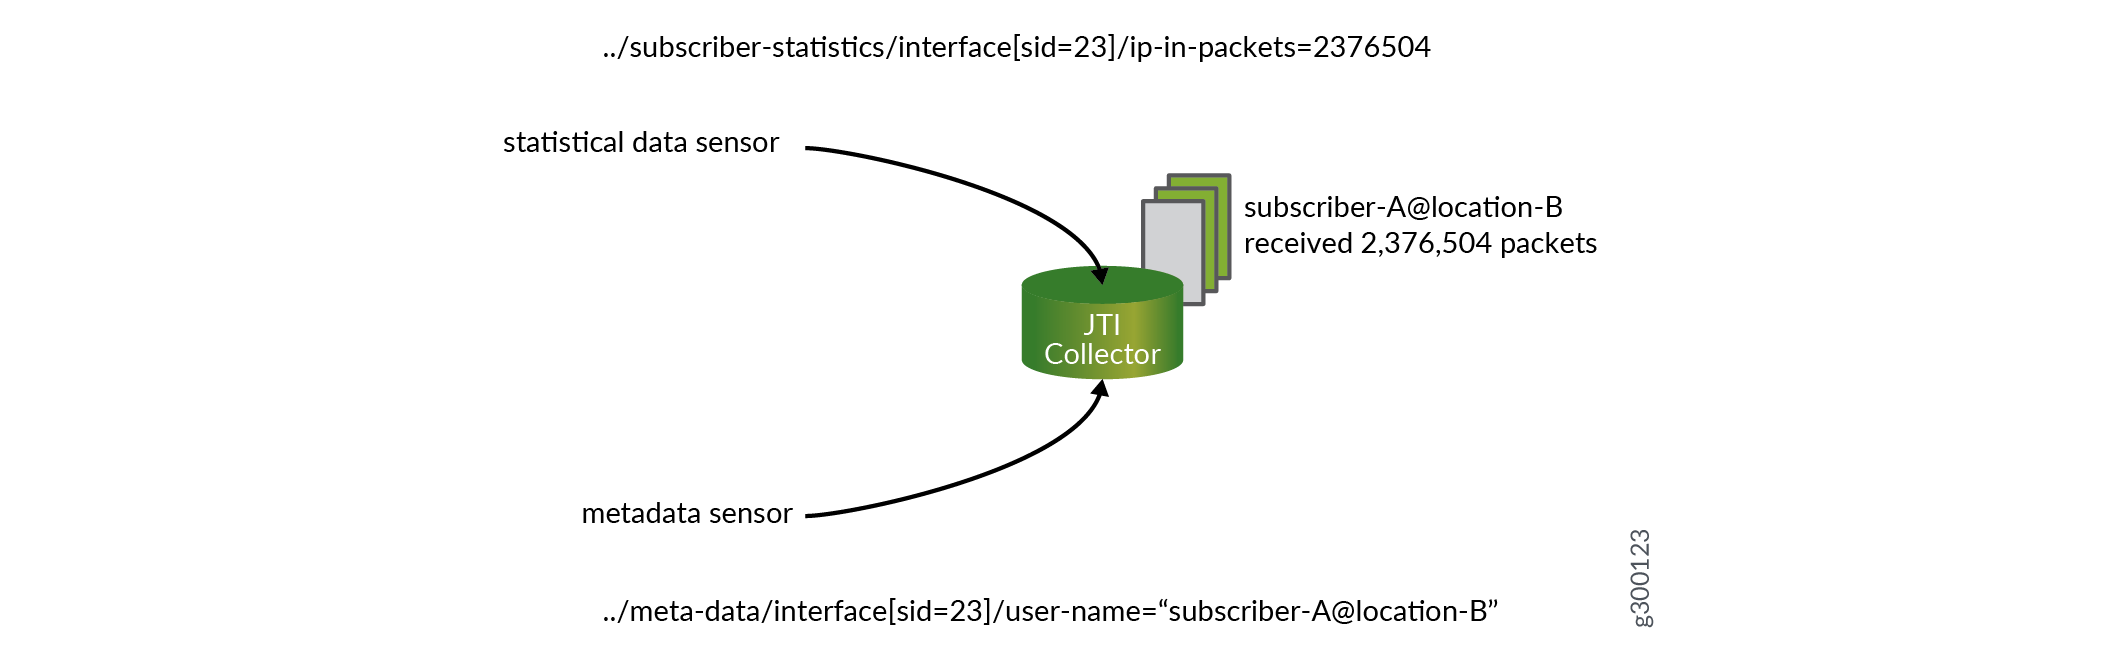 JTI Collector “Merging” Sensor Data